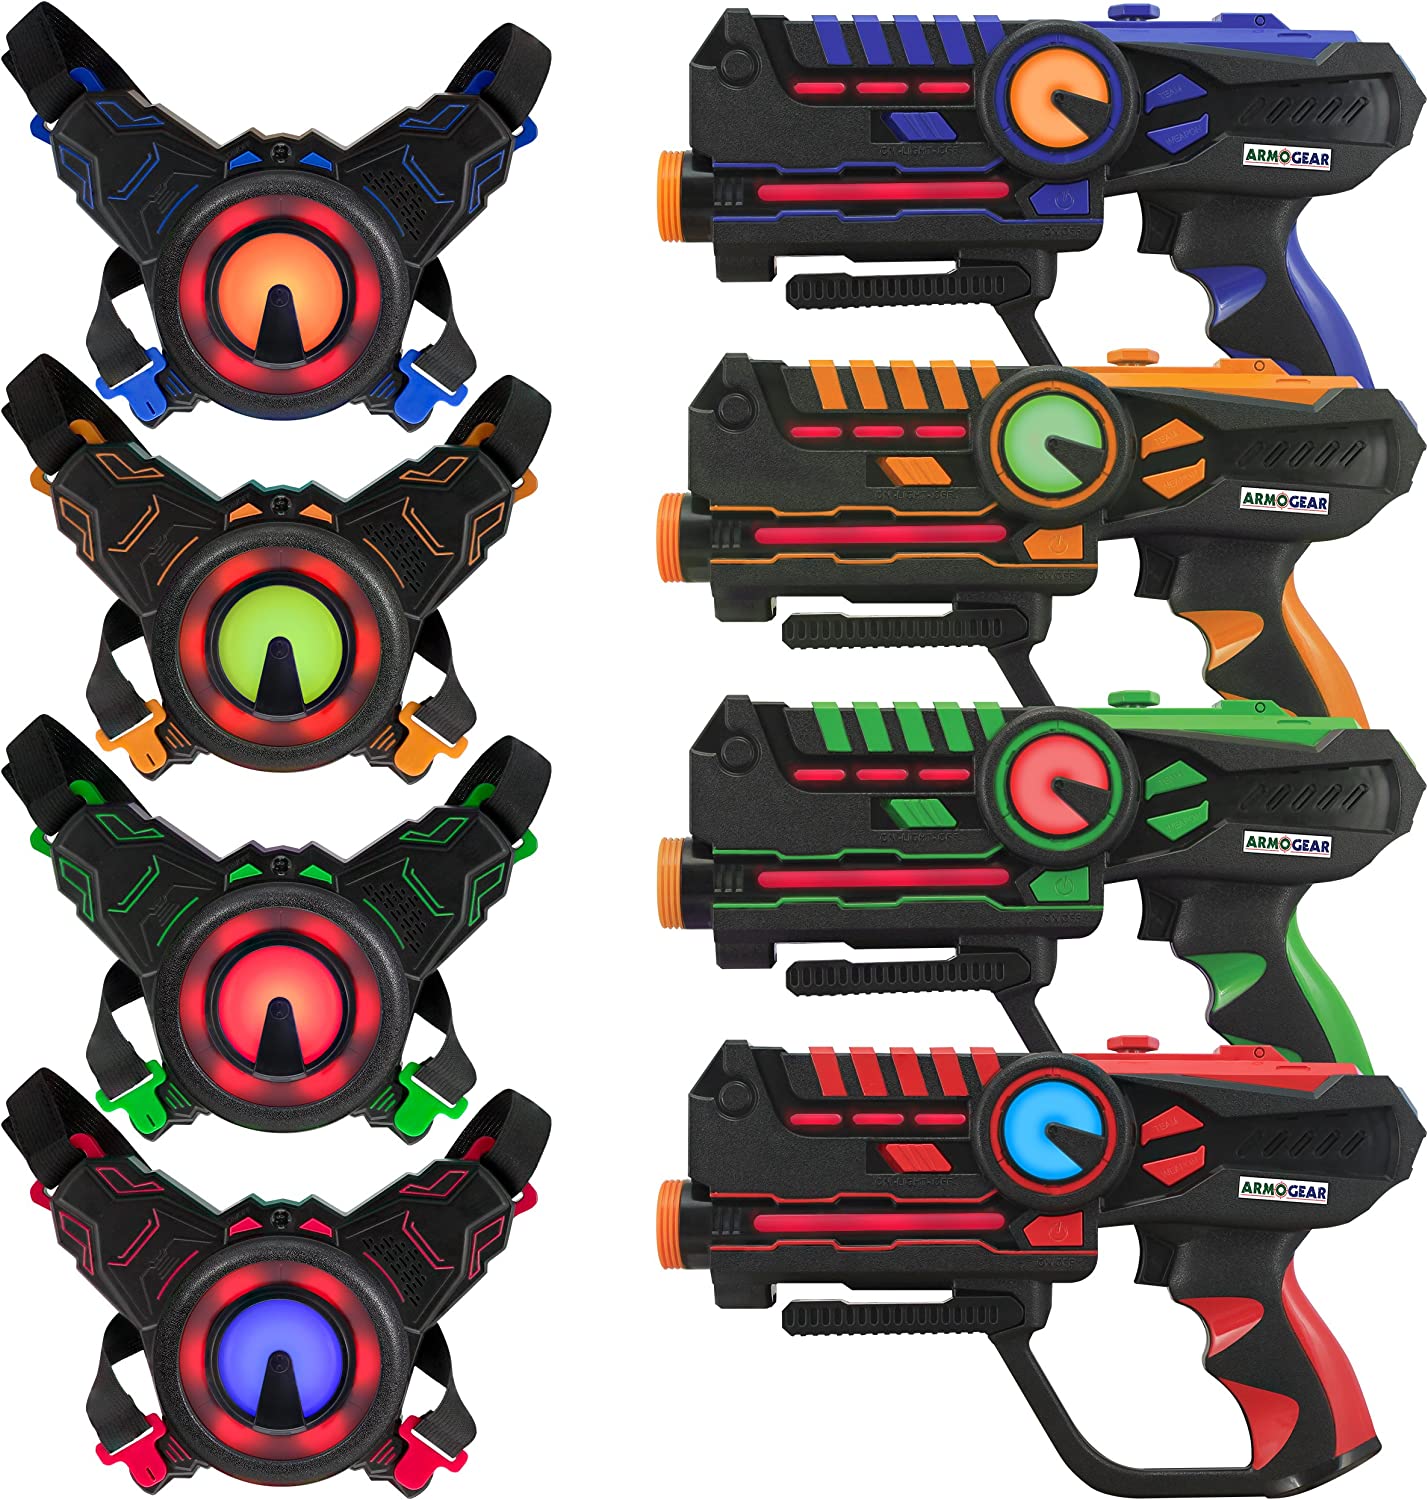 Laser Tag Guns with Vests